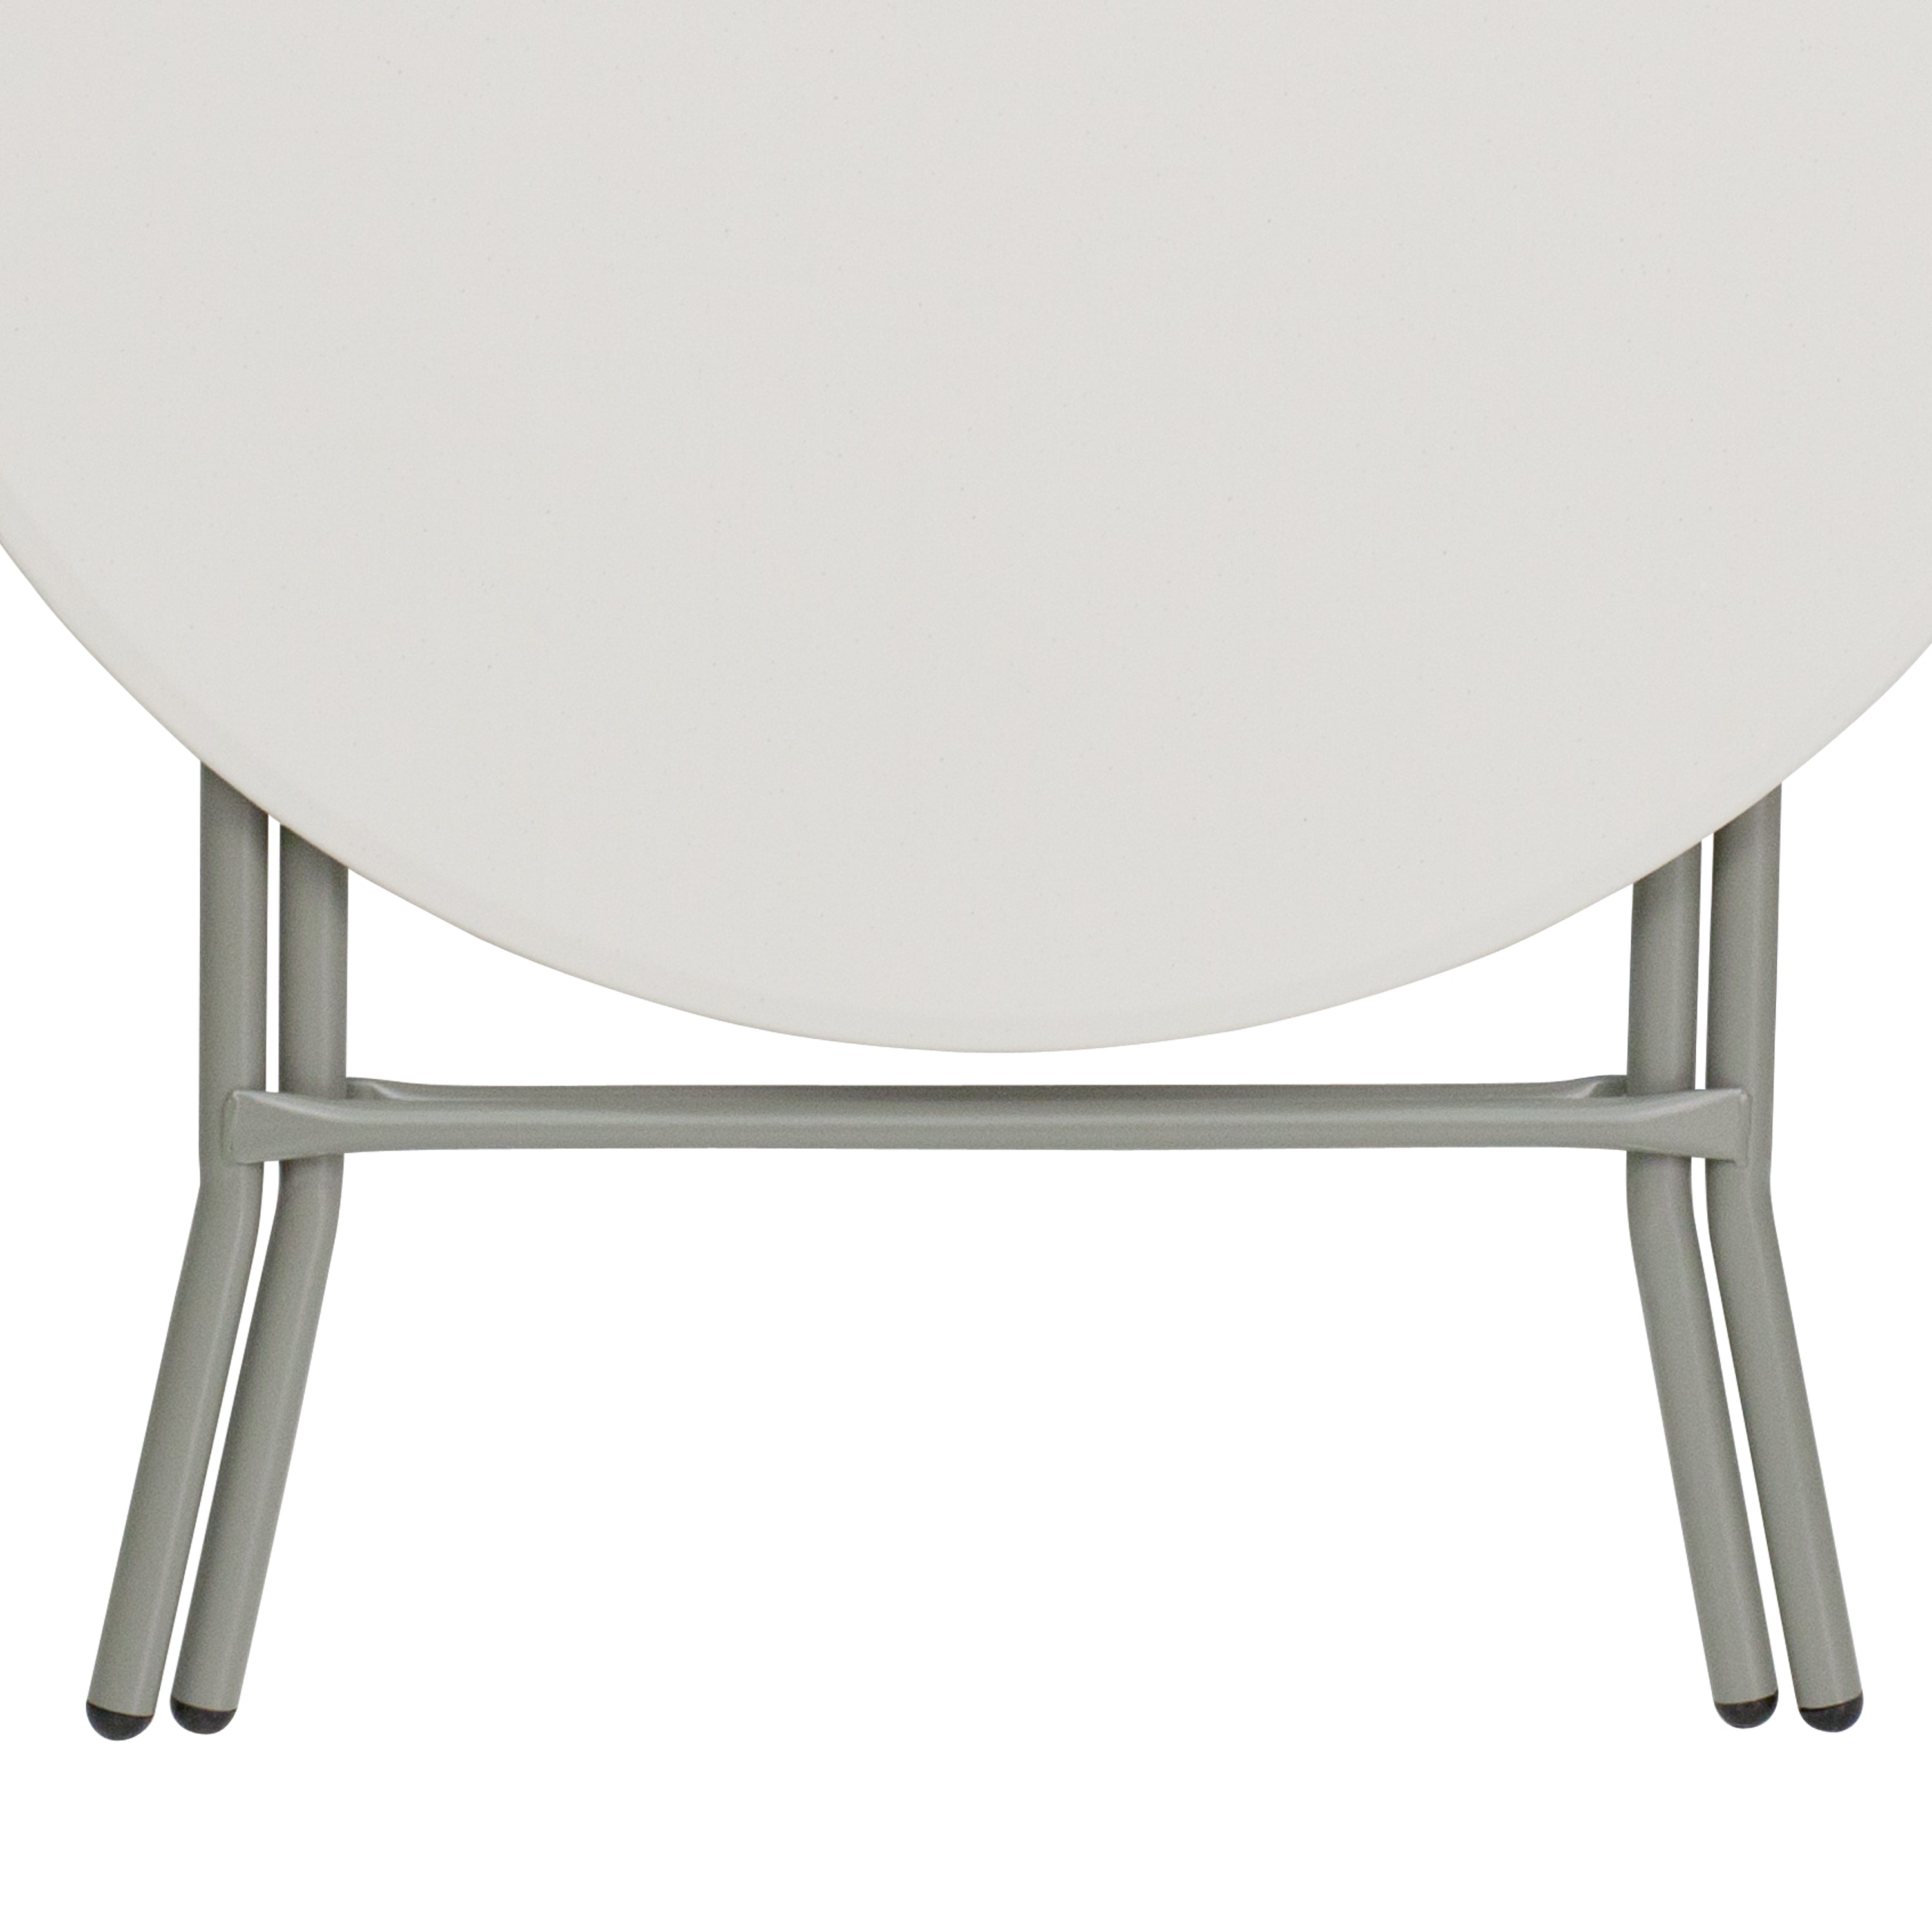 2.63-Foot Round Plastic Folding Table-Round Plastic Folding Table-Flash Furniture-Wall2Wall Furnishings